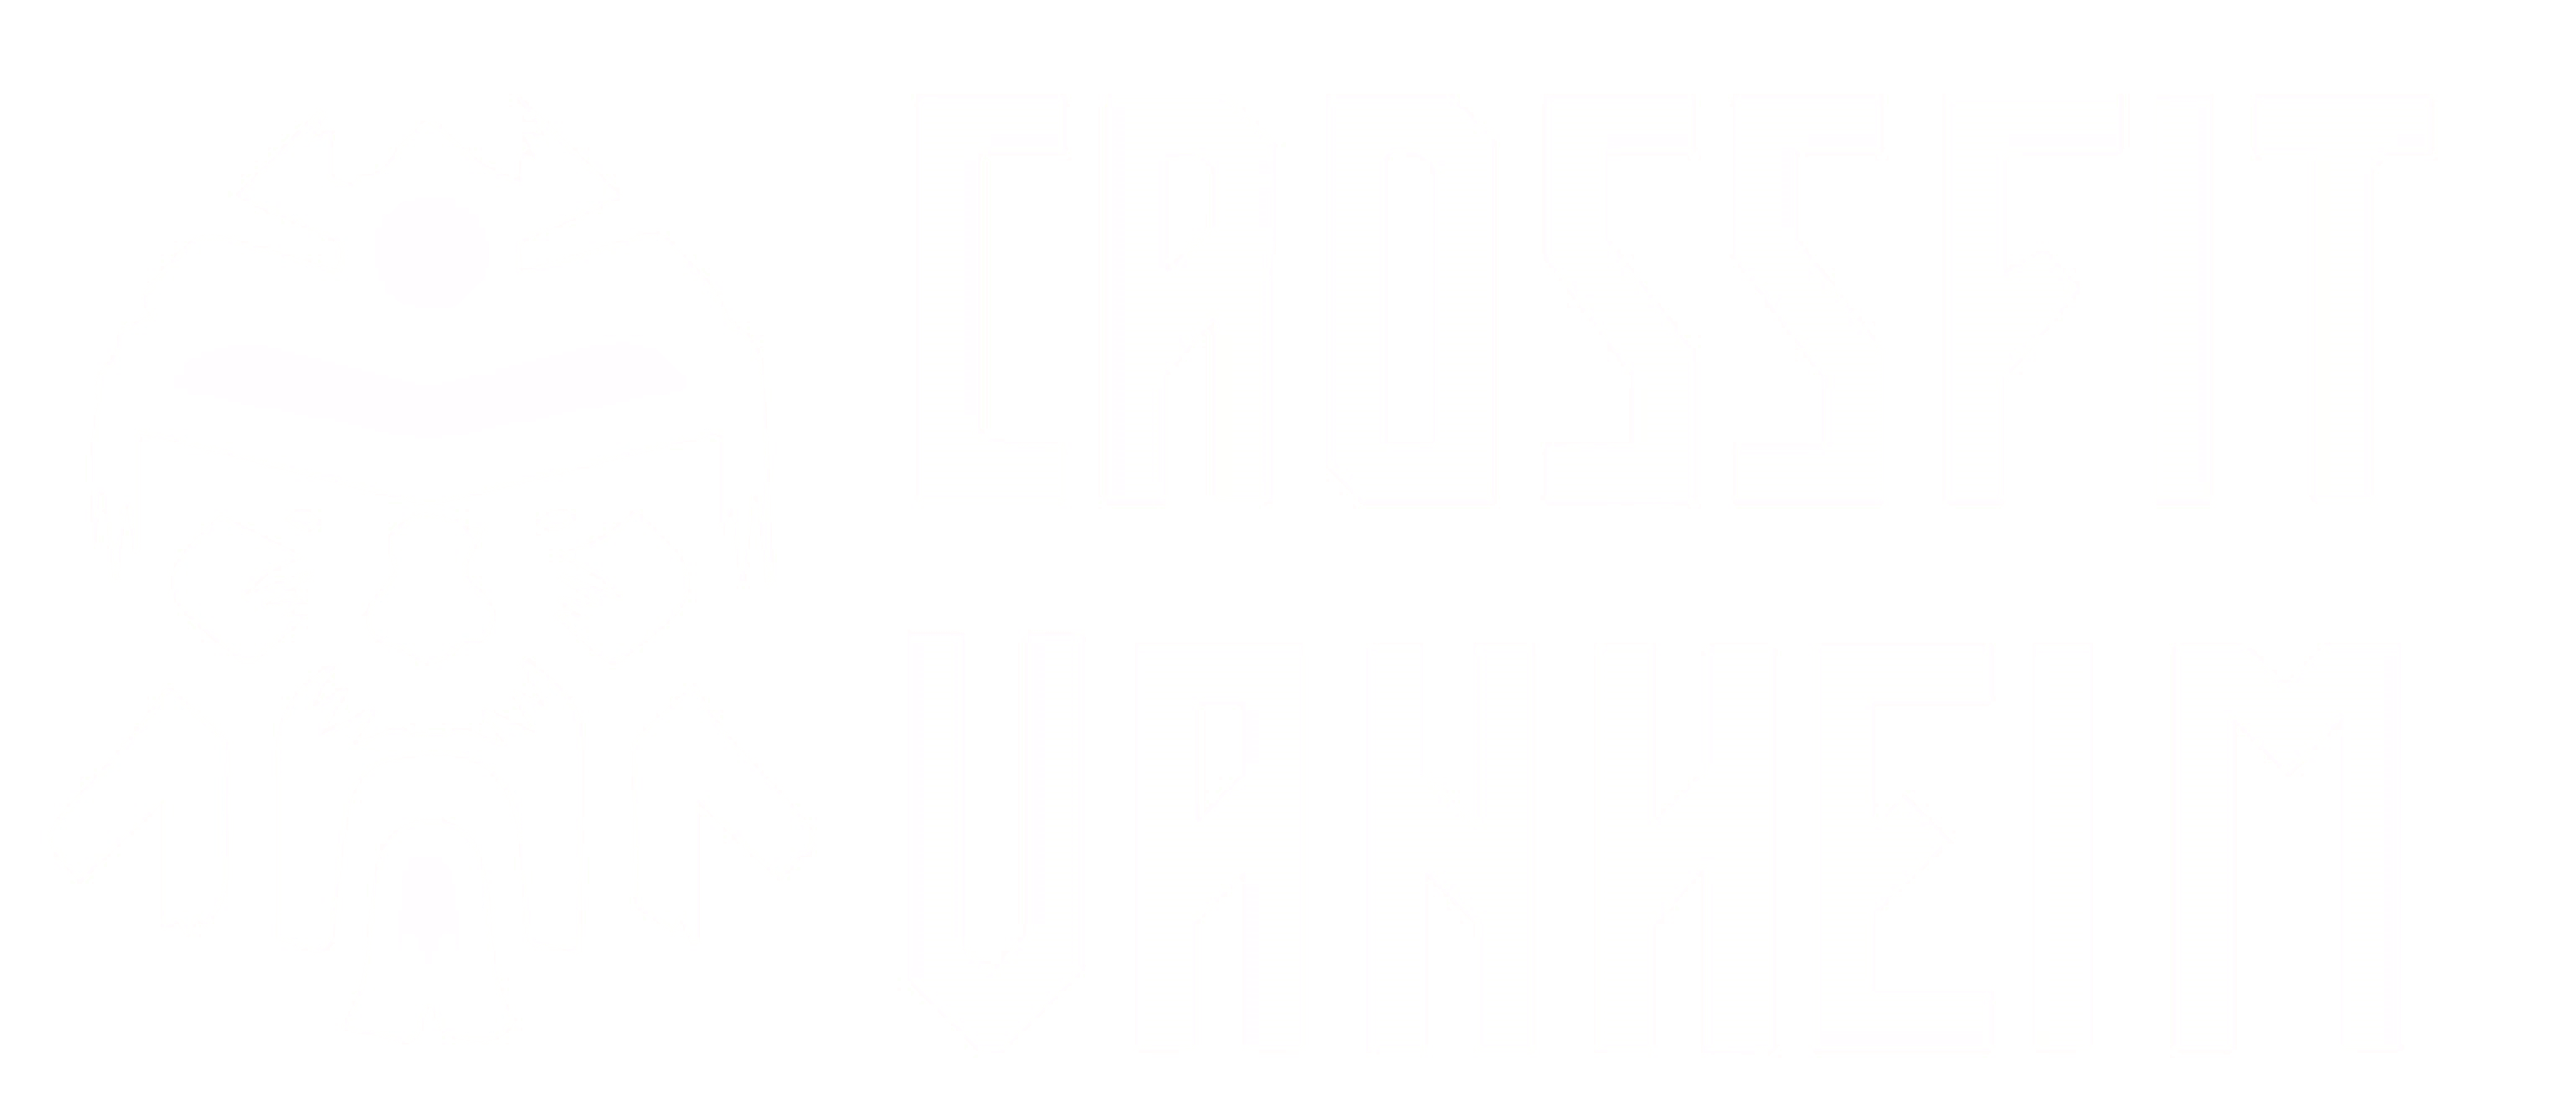 CrossFit Vanheim